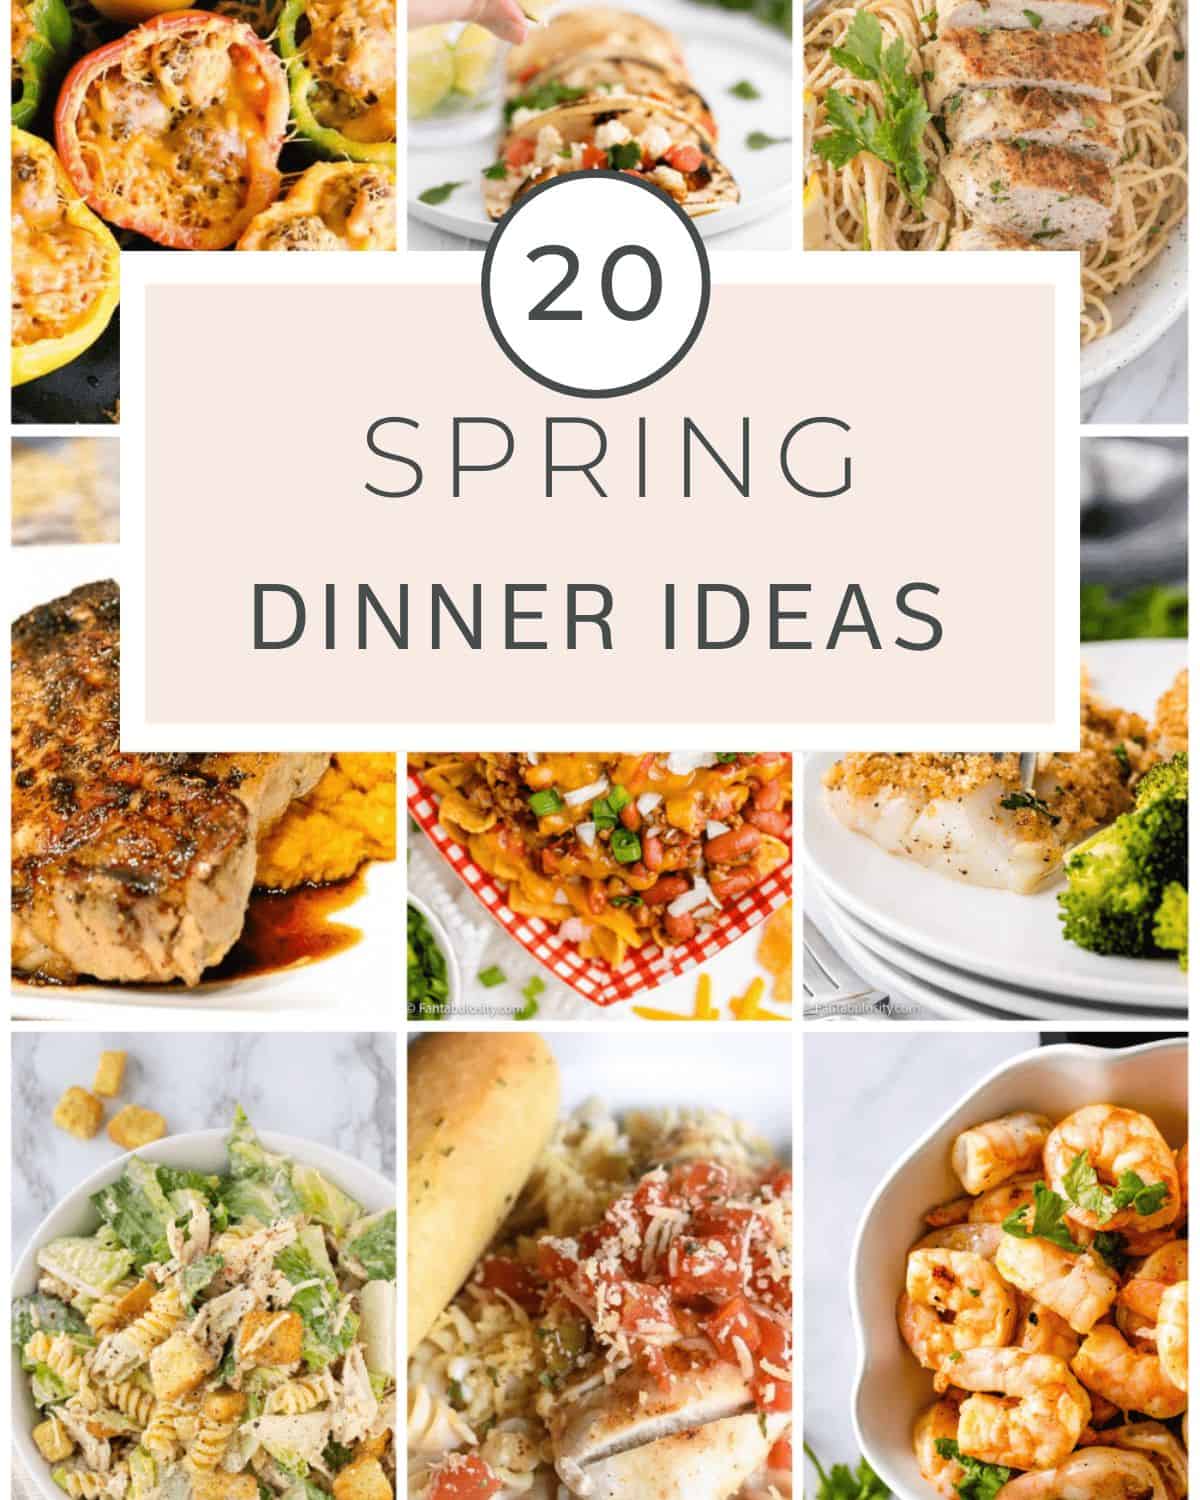 Spring dinner ideas collage